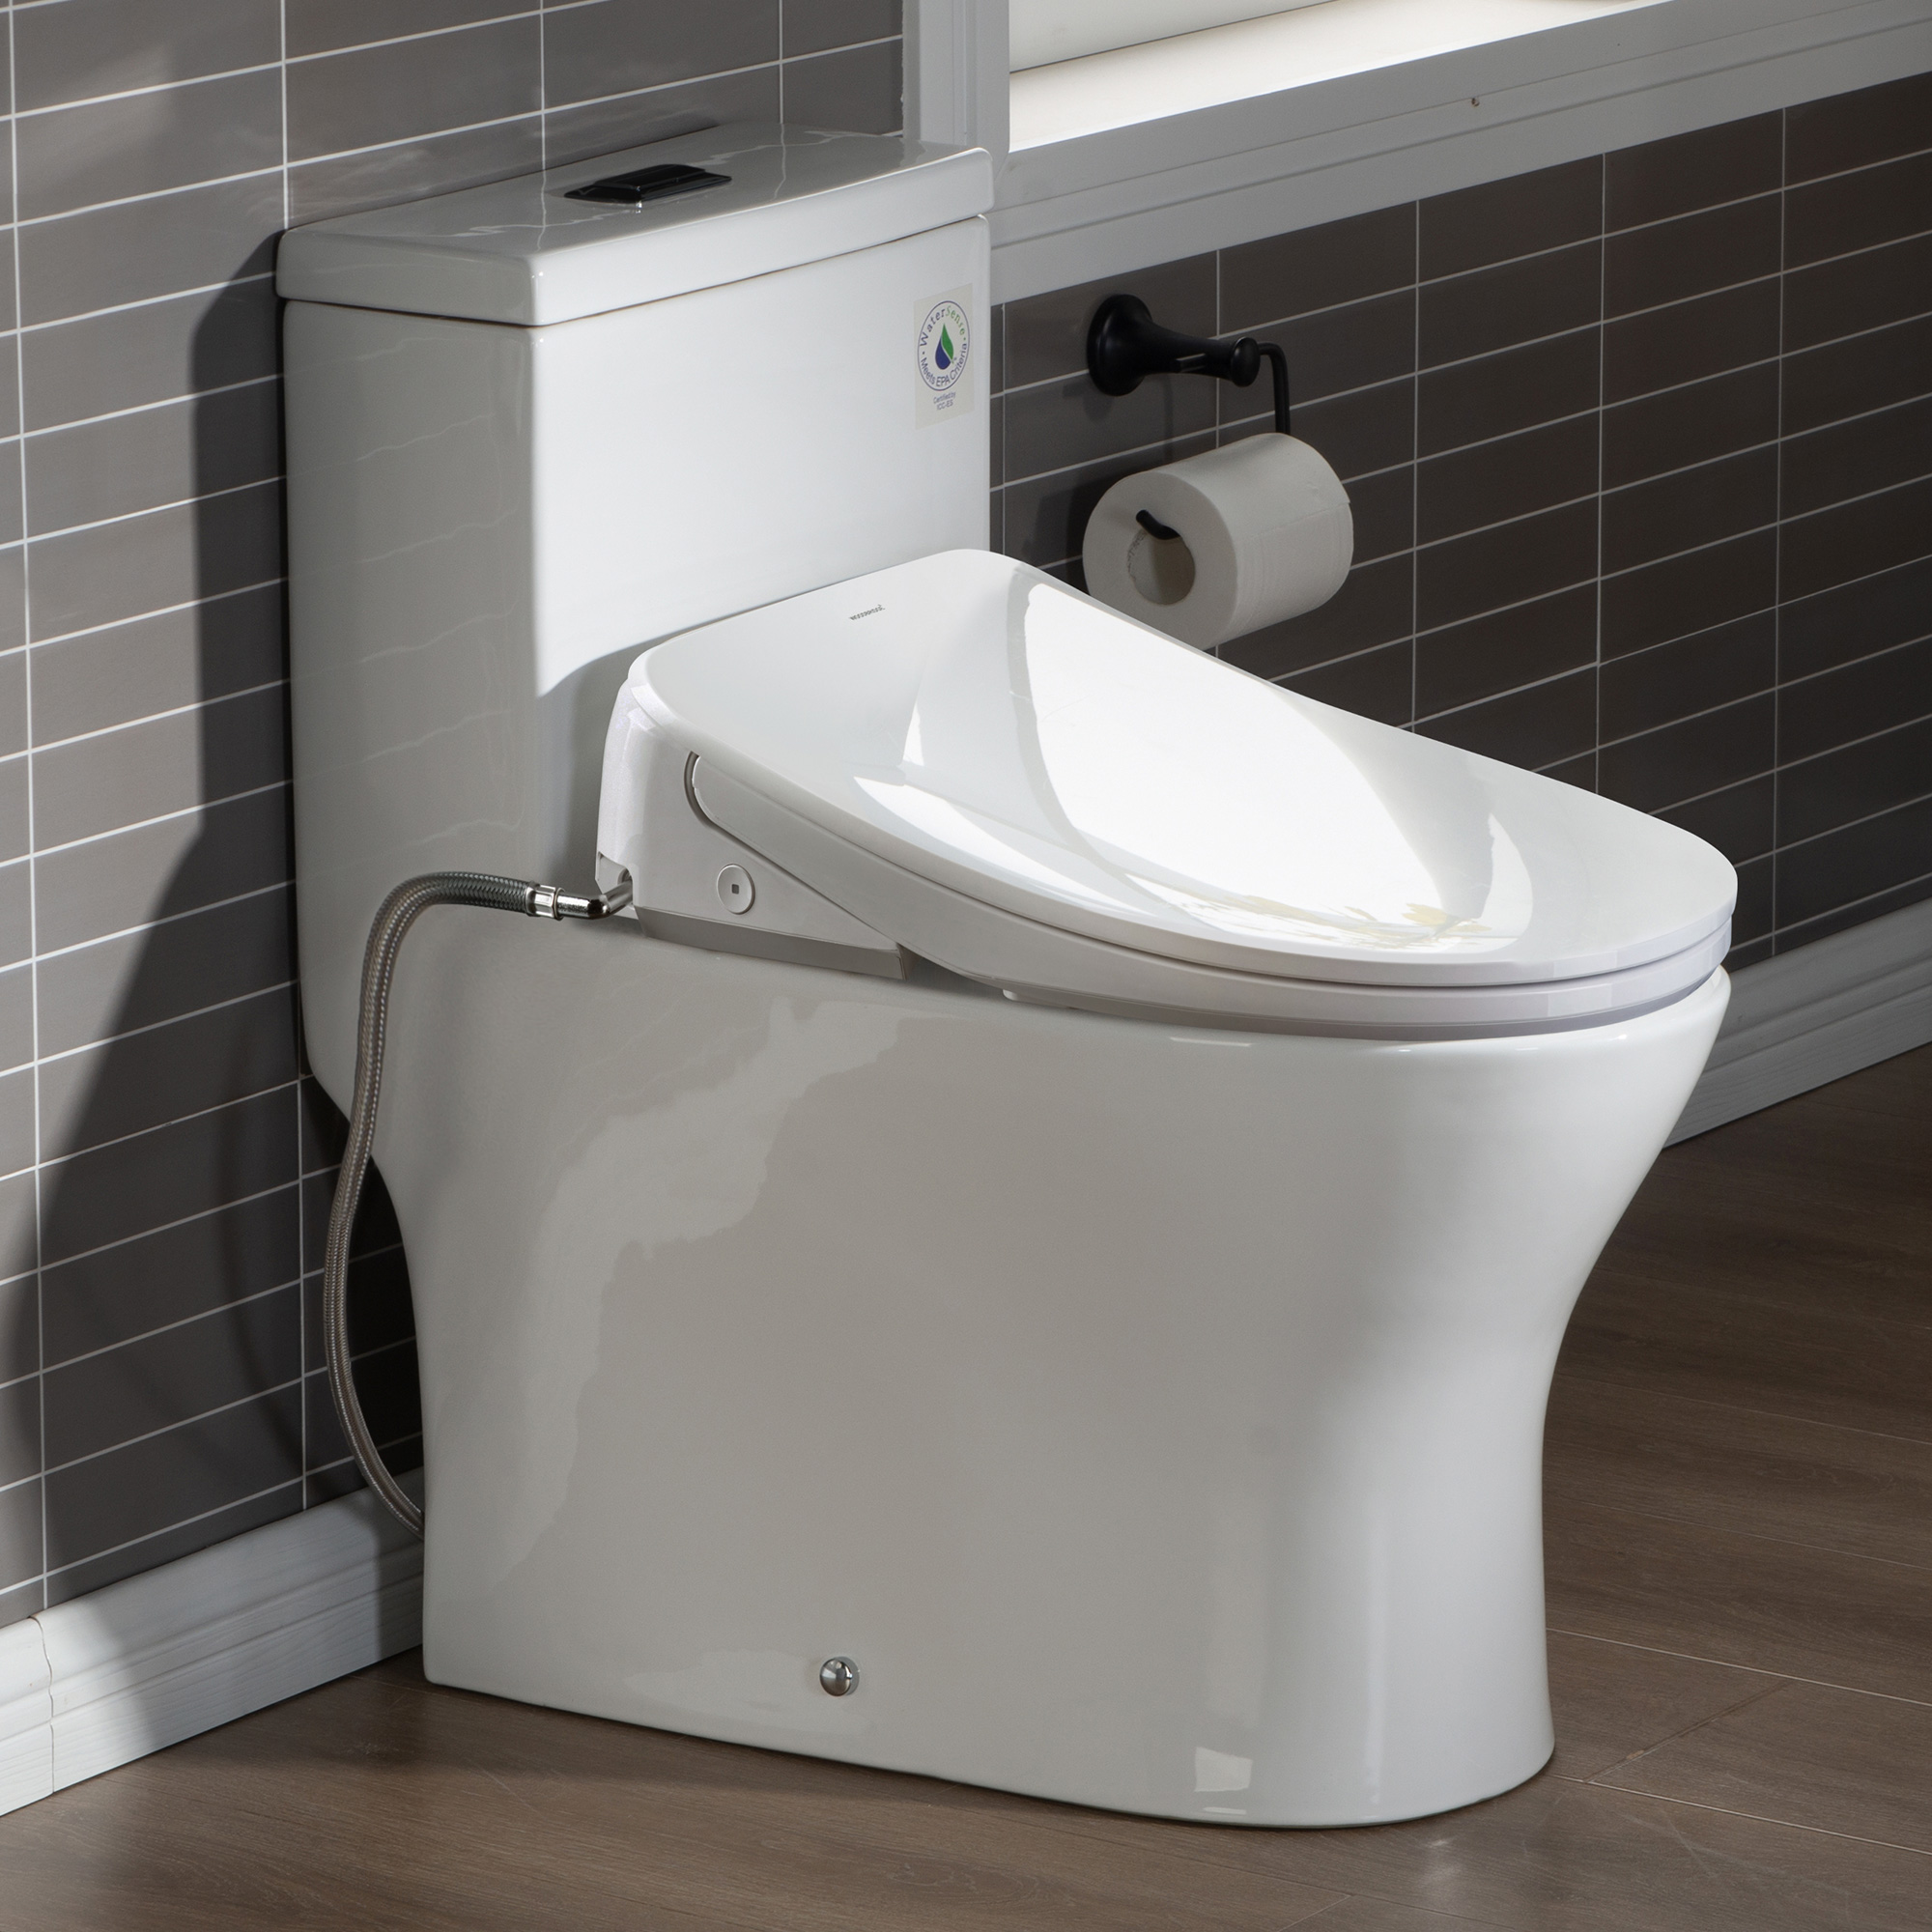  WOODBRIDGE Elongated 1-Piece Toilet with Advanced Auto Open & Close Bidet Smart Toilet Seat, Child Wash, 1000 Gram MaP Flushing Score, 1.28 GPF Dual, Water Sensed_15232